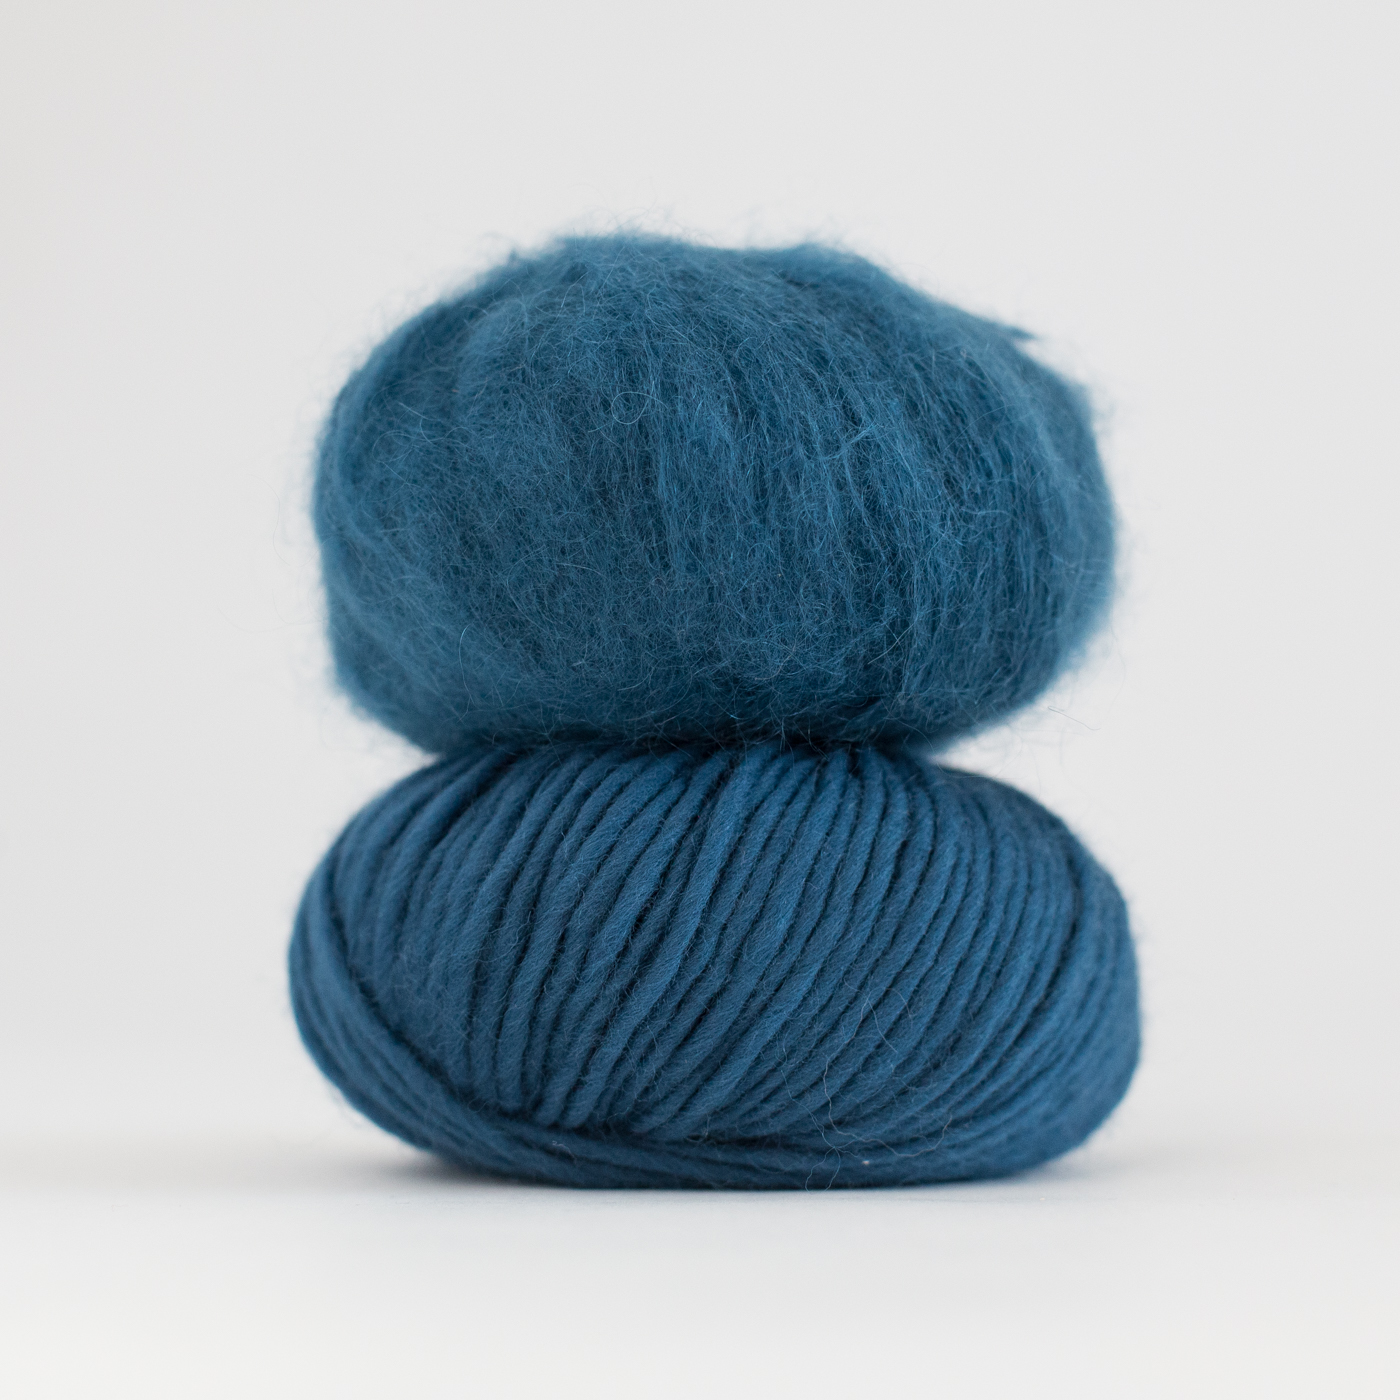 online webshop yarn pattern - Marshmallow Beanie | Fluffy beanie knitting kit - by HipKnitShop - 31/08/2018